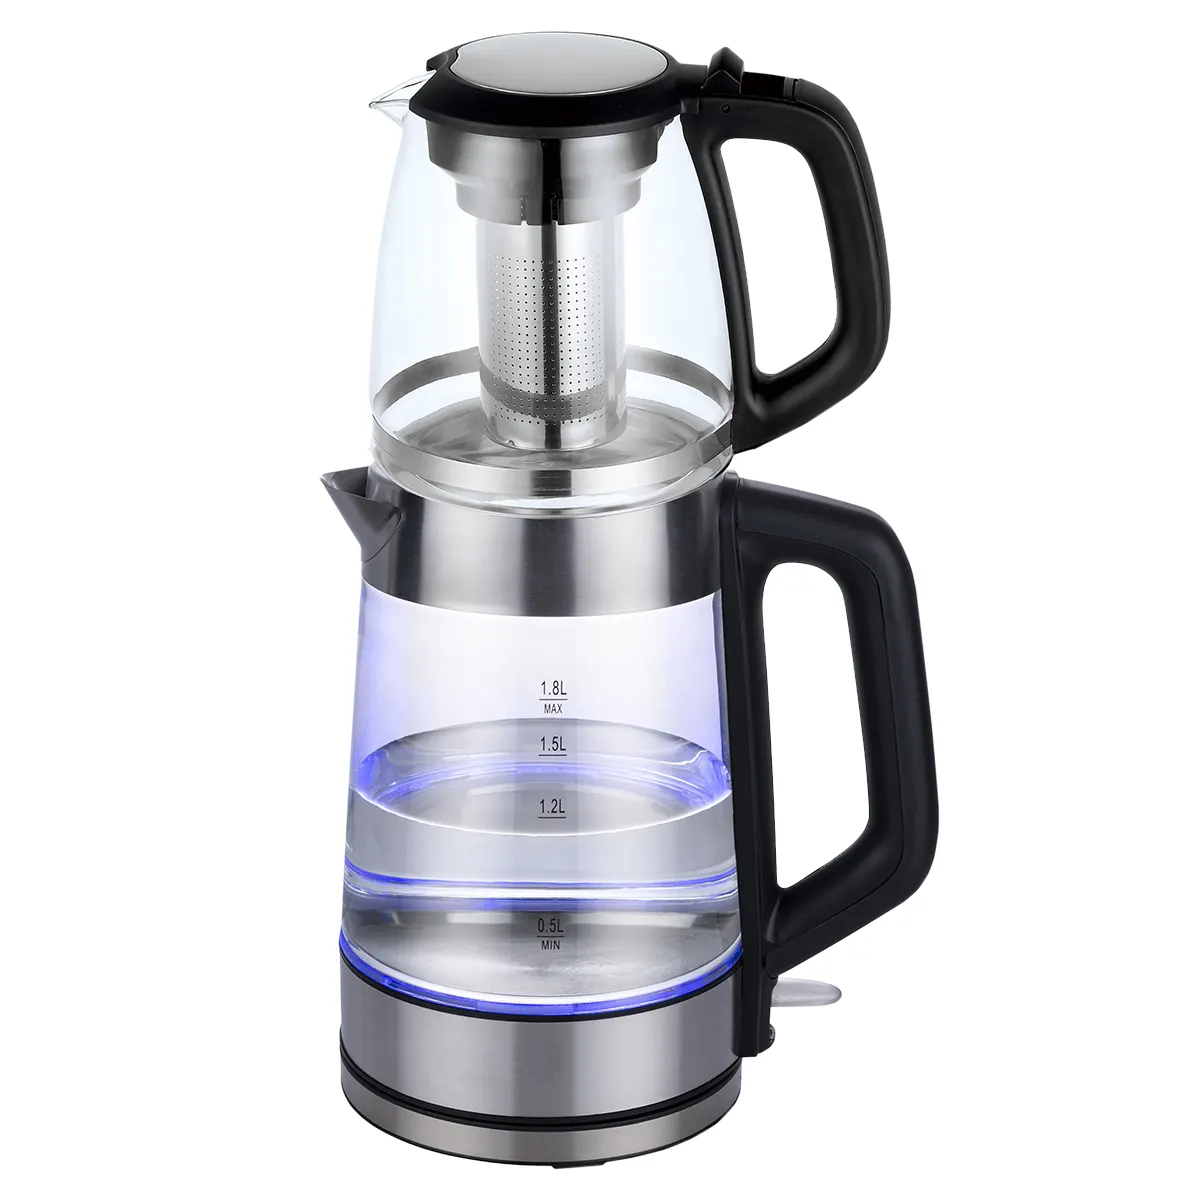 1.8L+1.2L control 360 swivel cordless electric kettle Turkish tea maker Double Glass Tea pots smart kettle